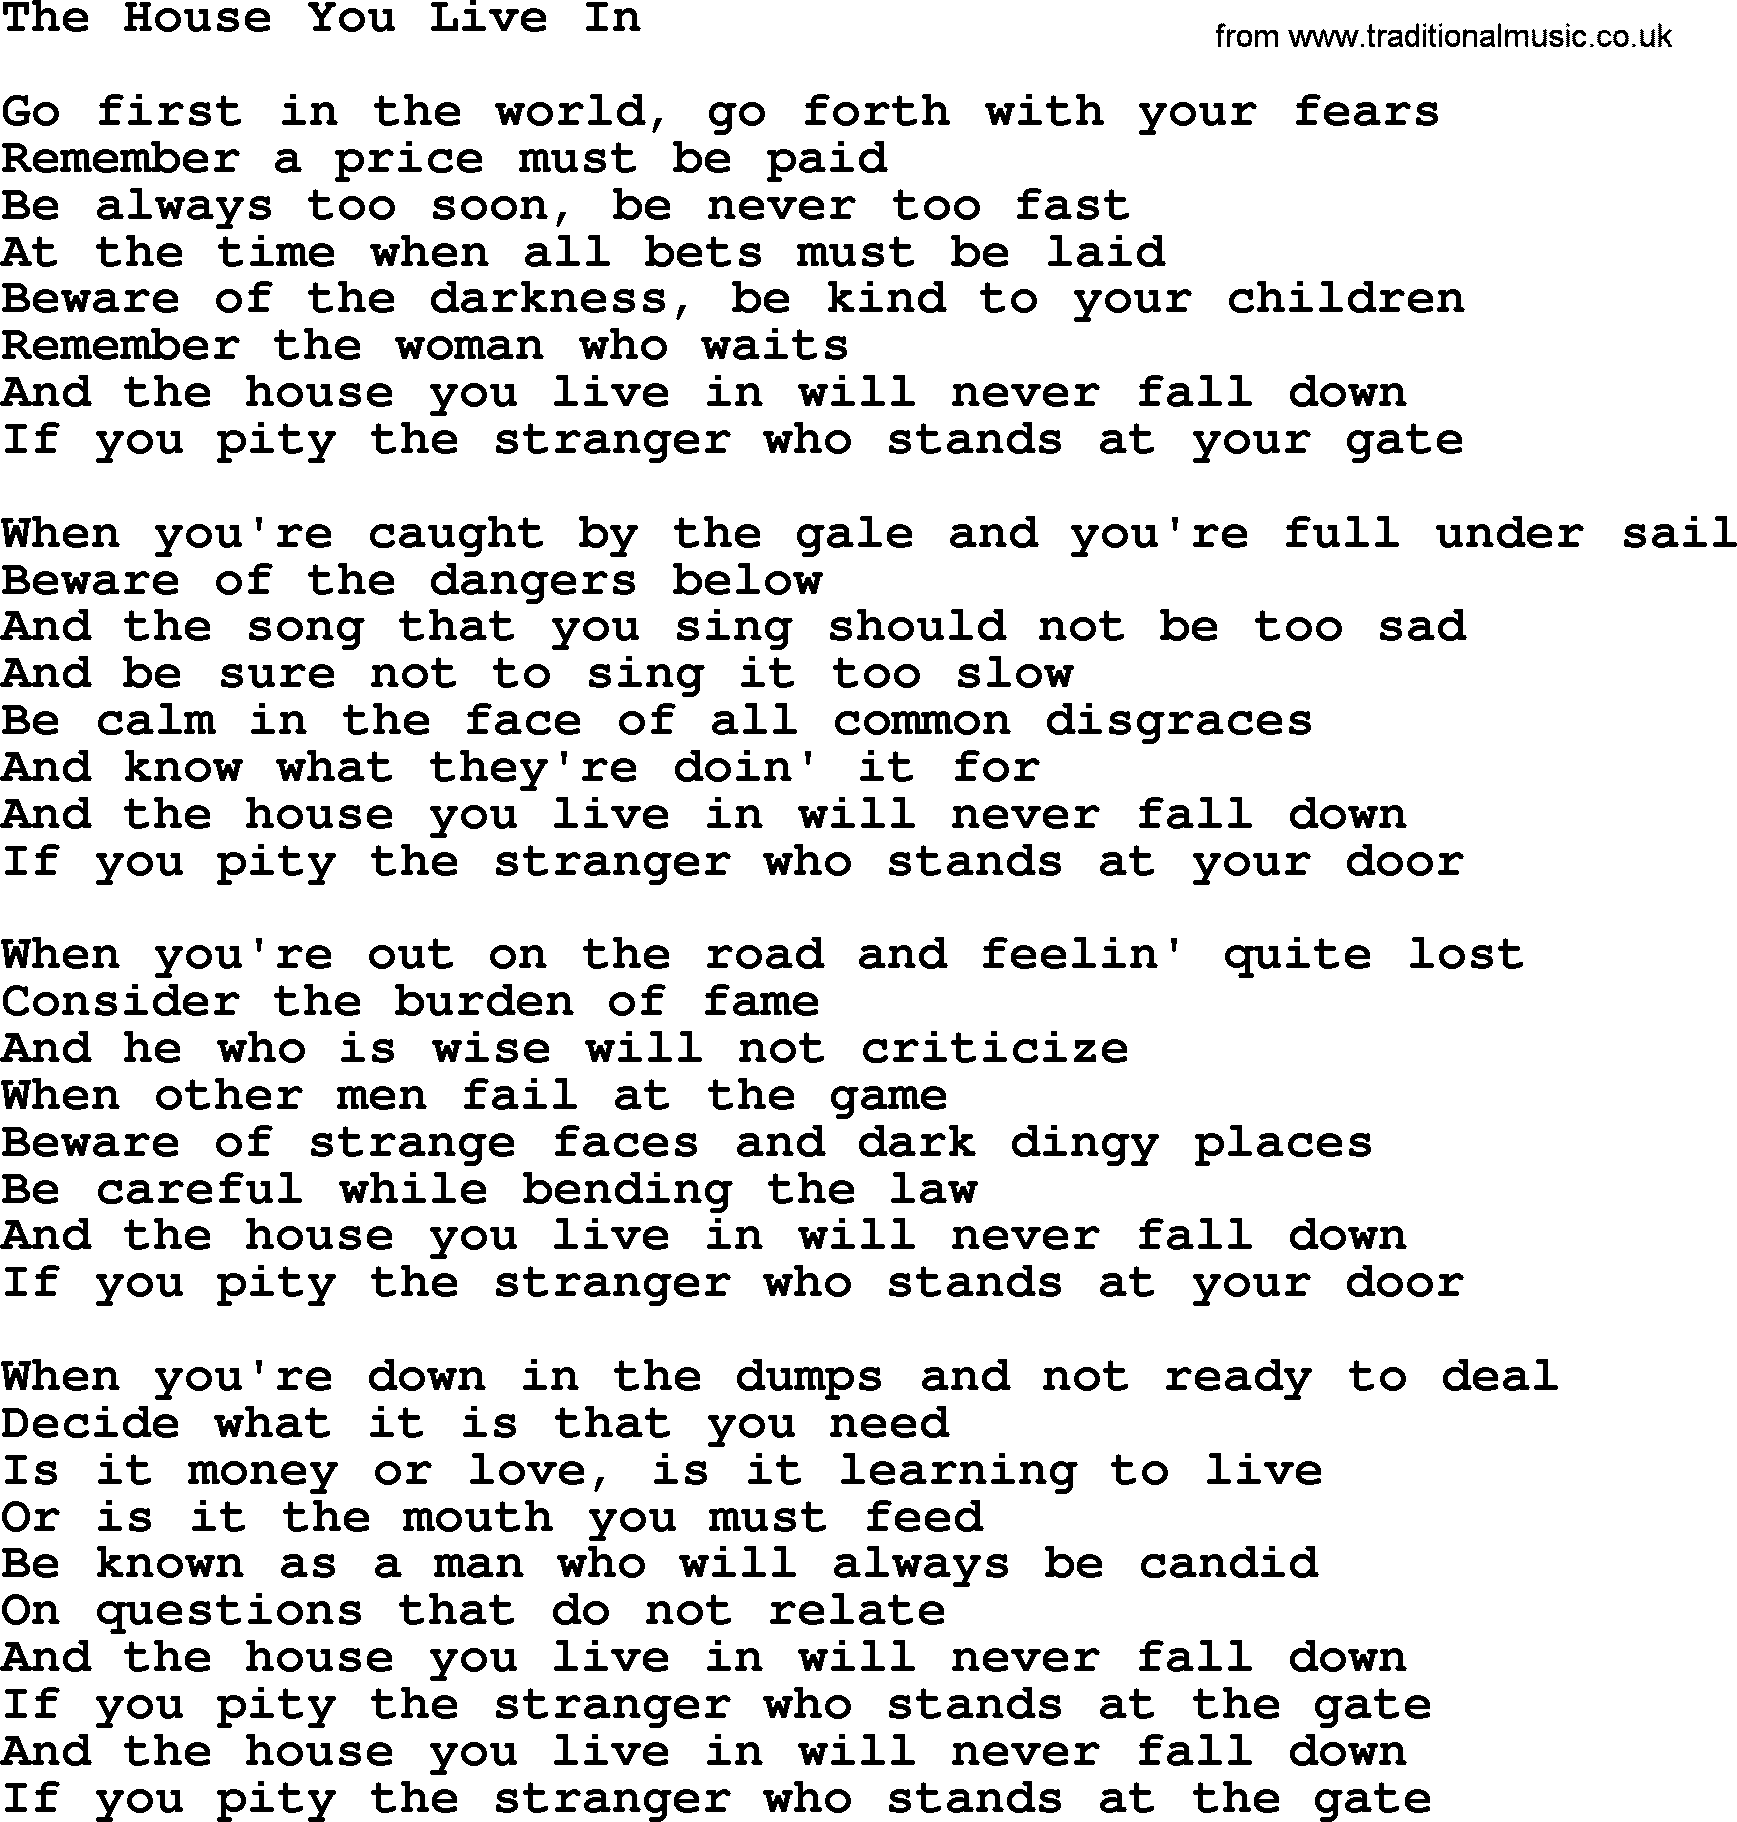 Gordon Lightfoot song The House You Live In, lyrics